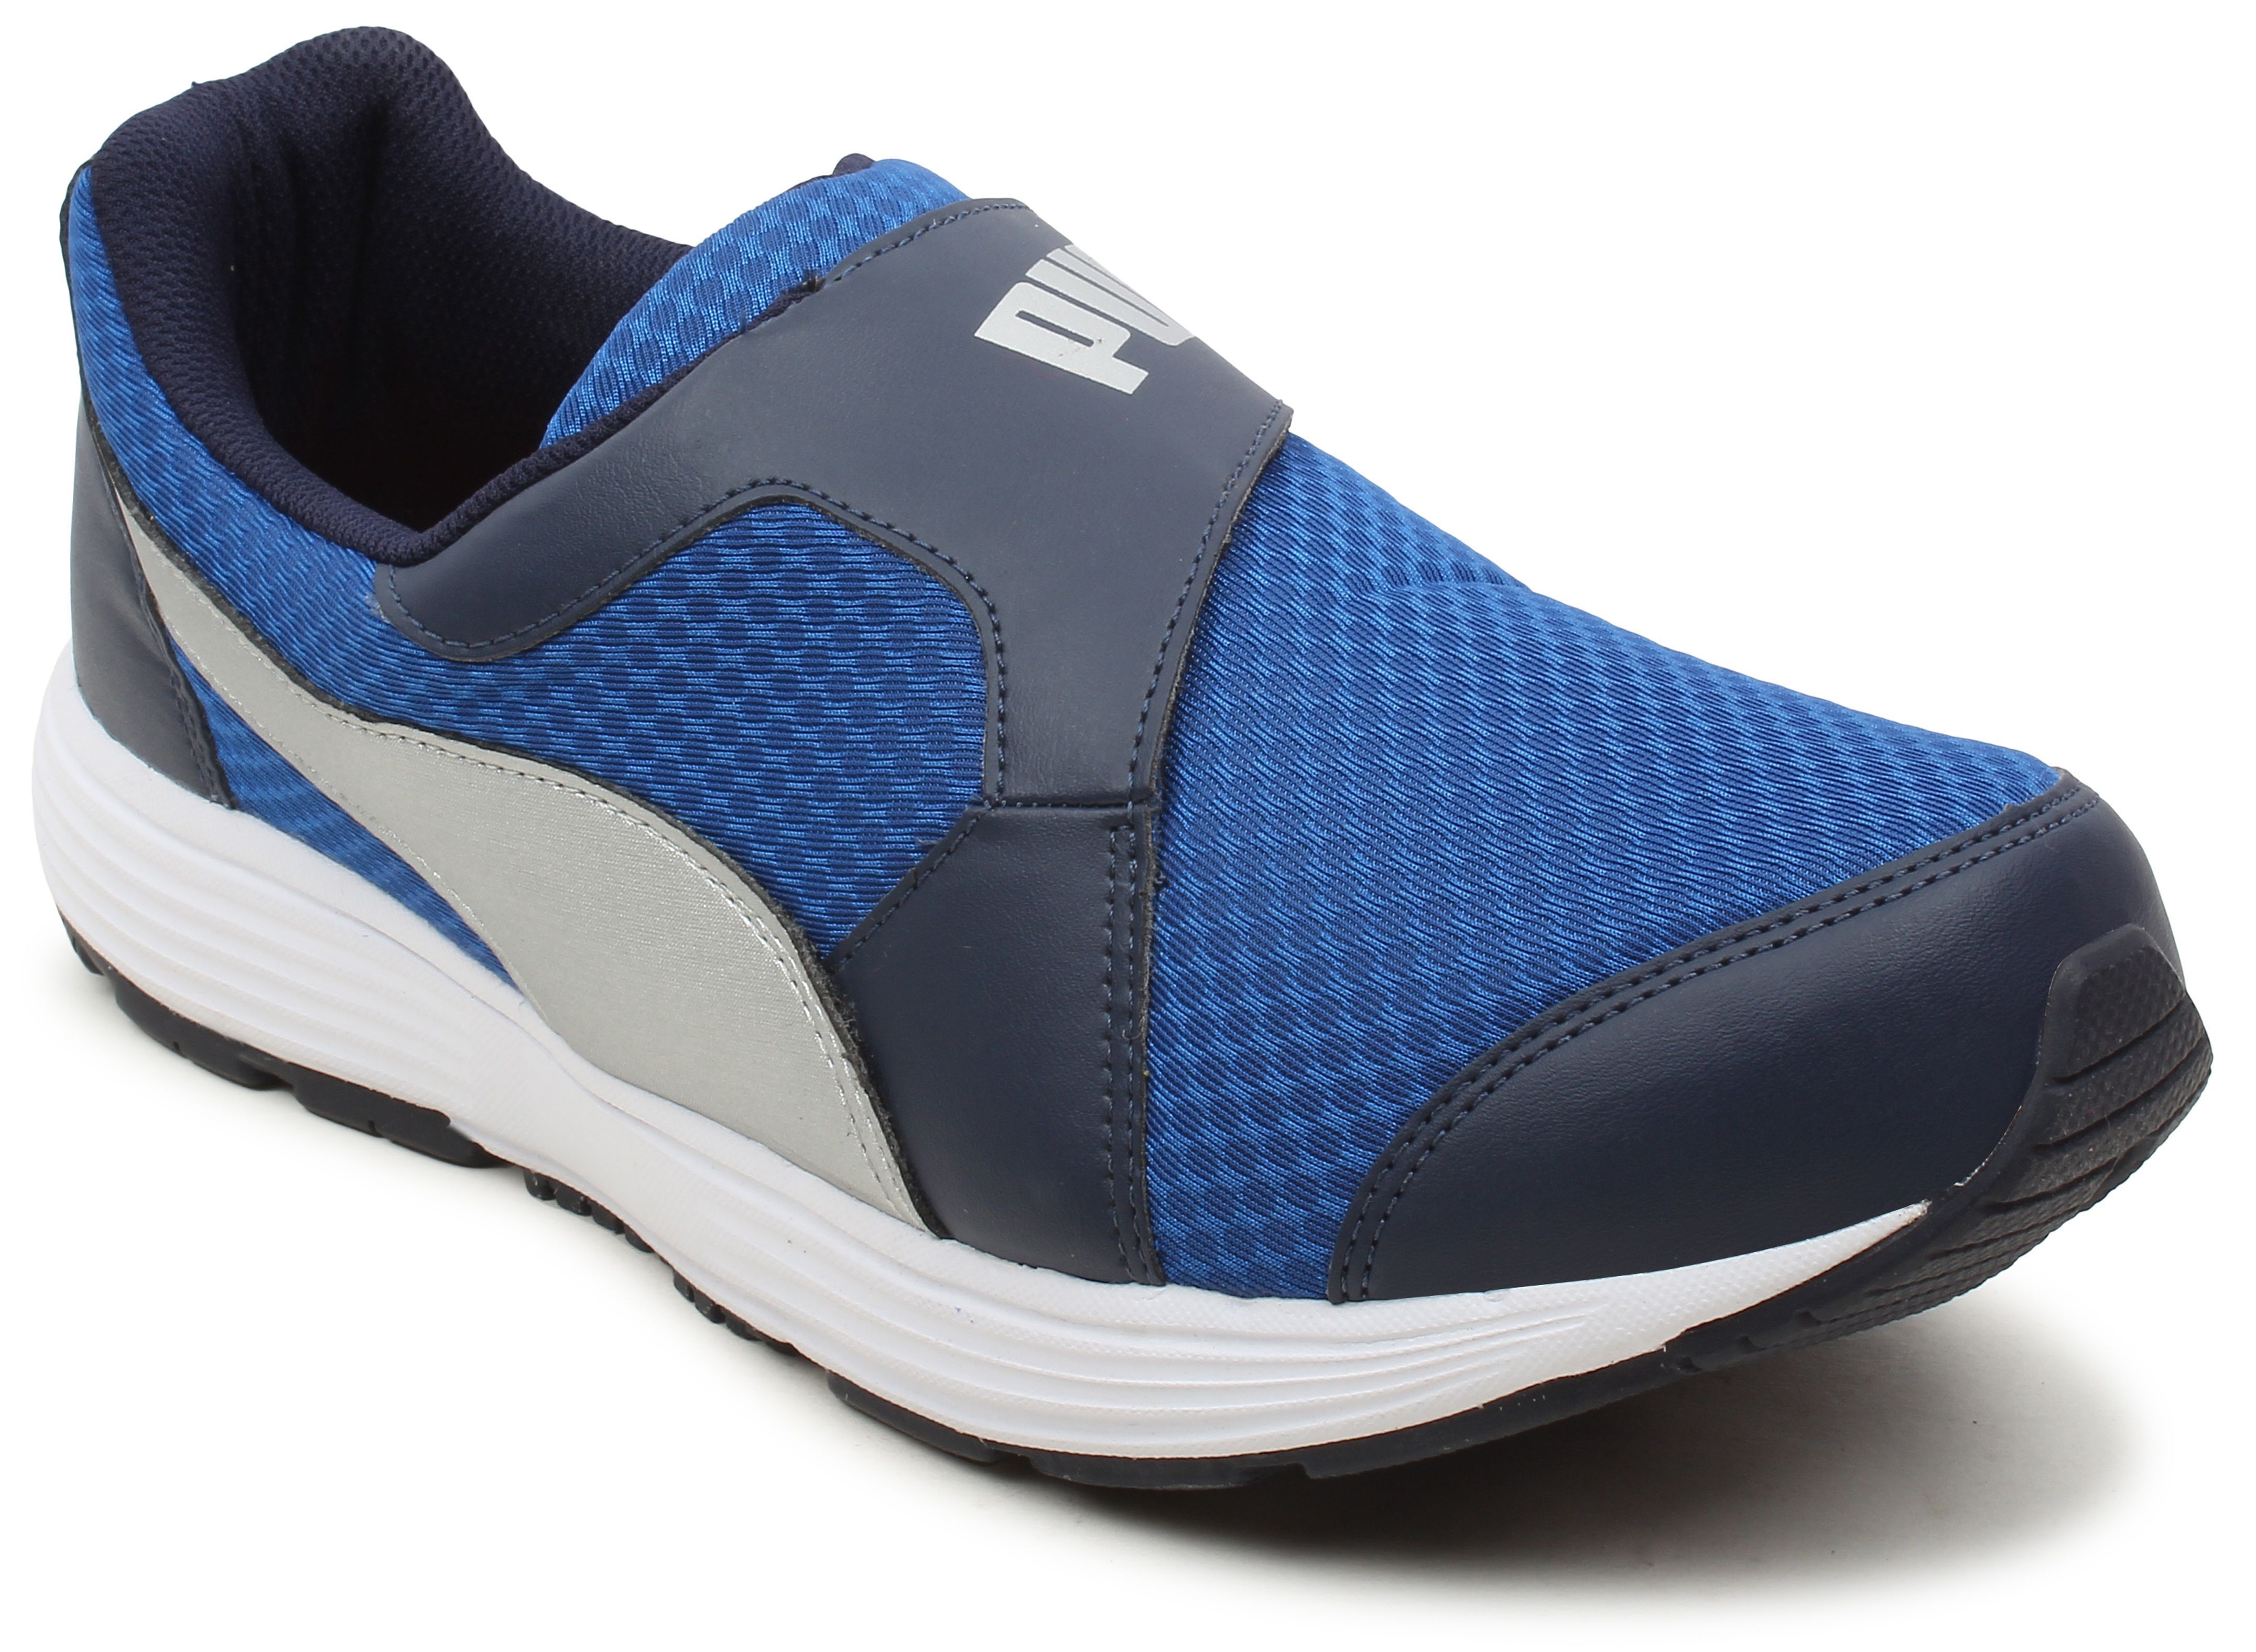 Puma Reef IDP Blue Running Shoes - Buy Puma Reef IDP Blue Running Shoes ...